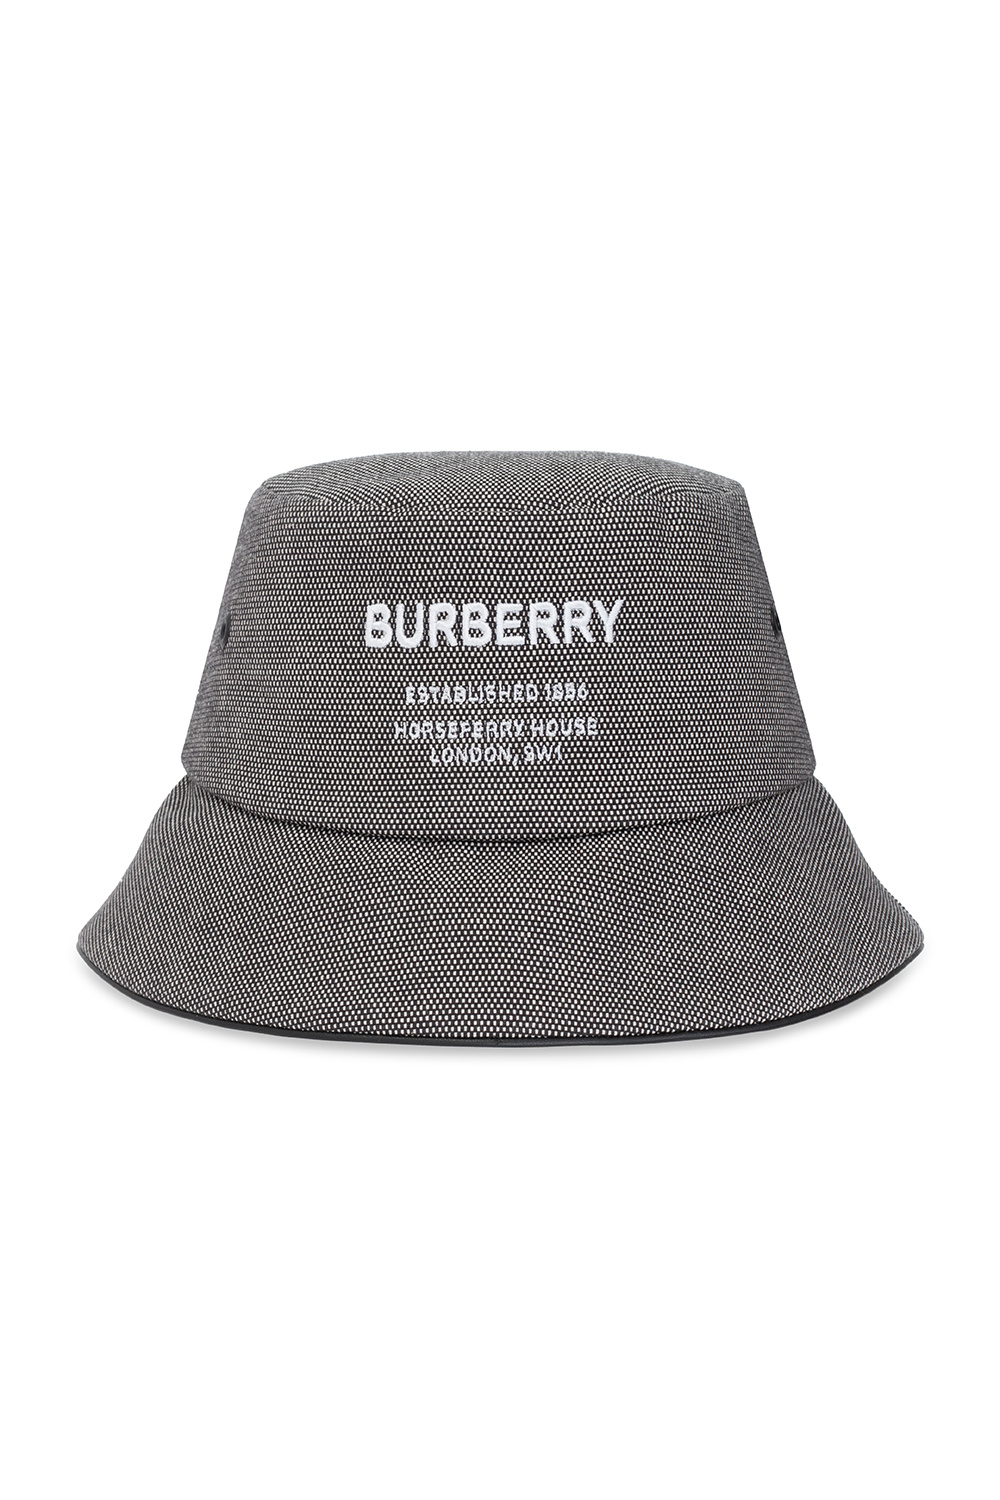 Burberry Bucket hat with logo | Women's Accessories | Vitkac